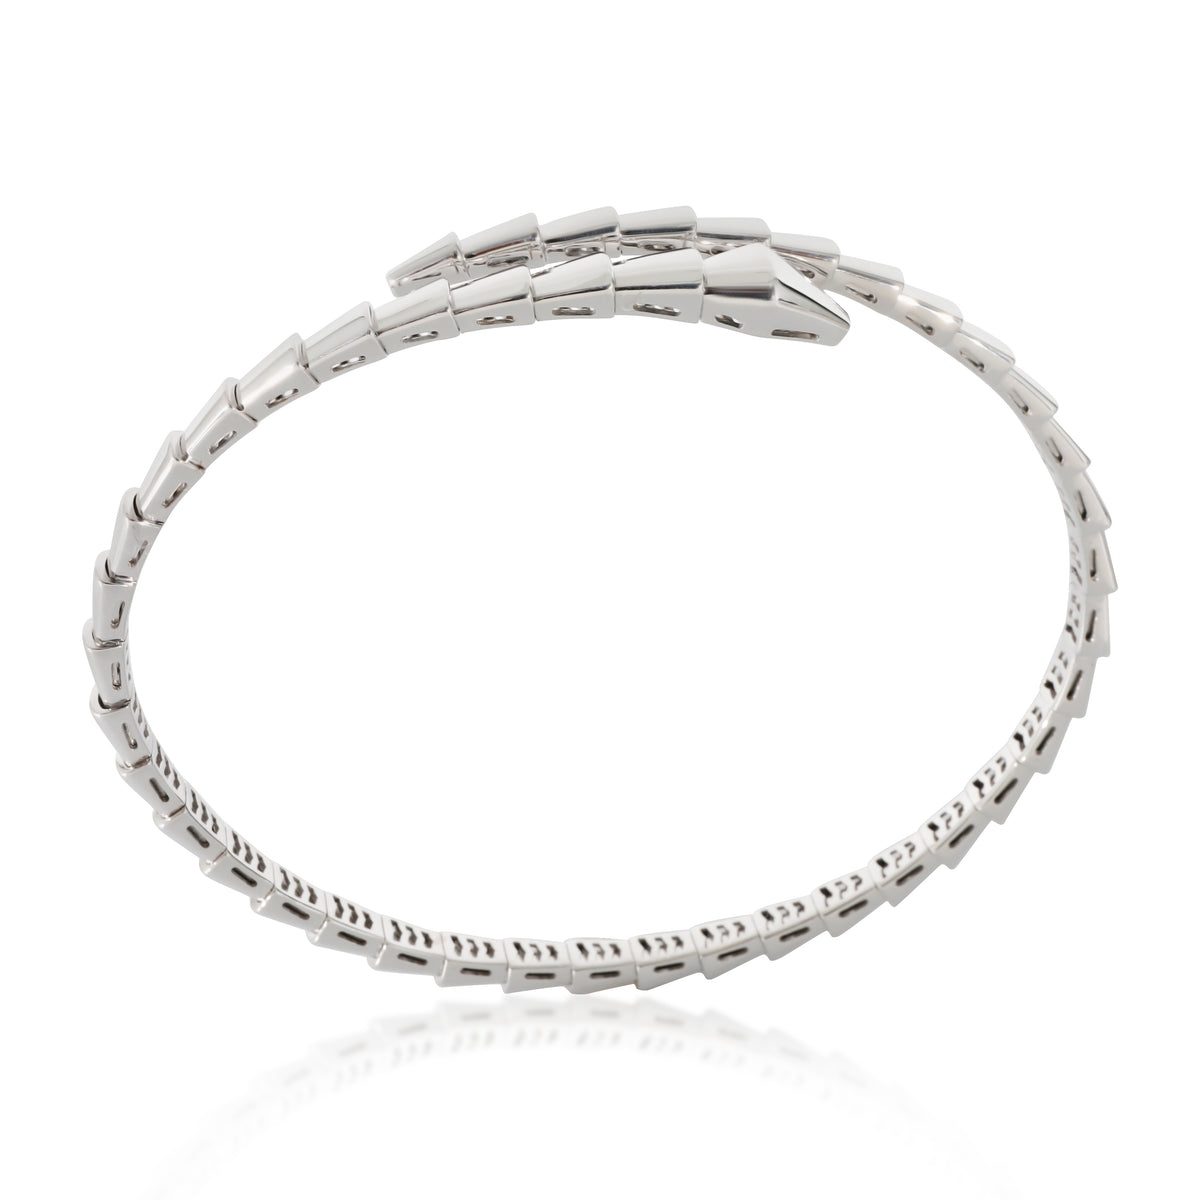 BVLGARI Serpenti Viper Bracelet in 18k White Gold, Size XL